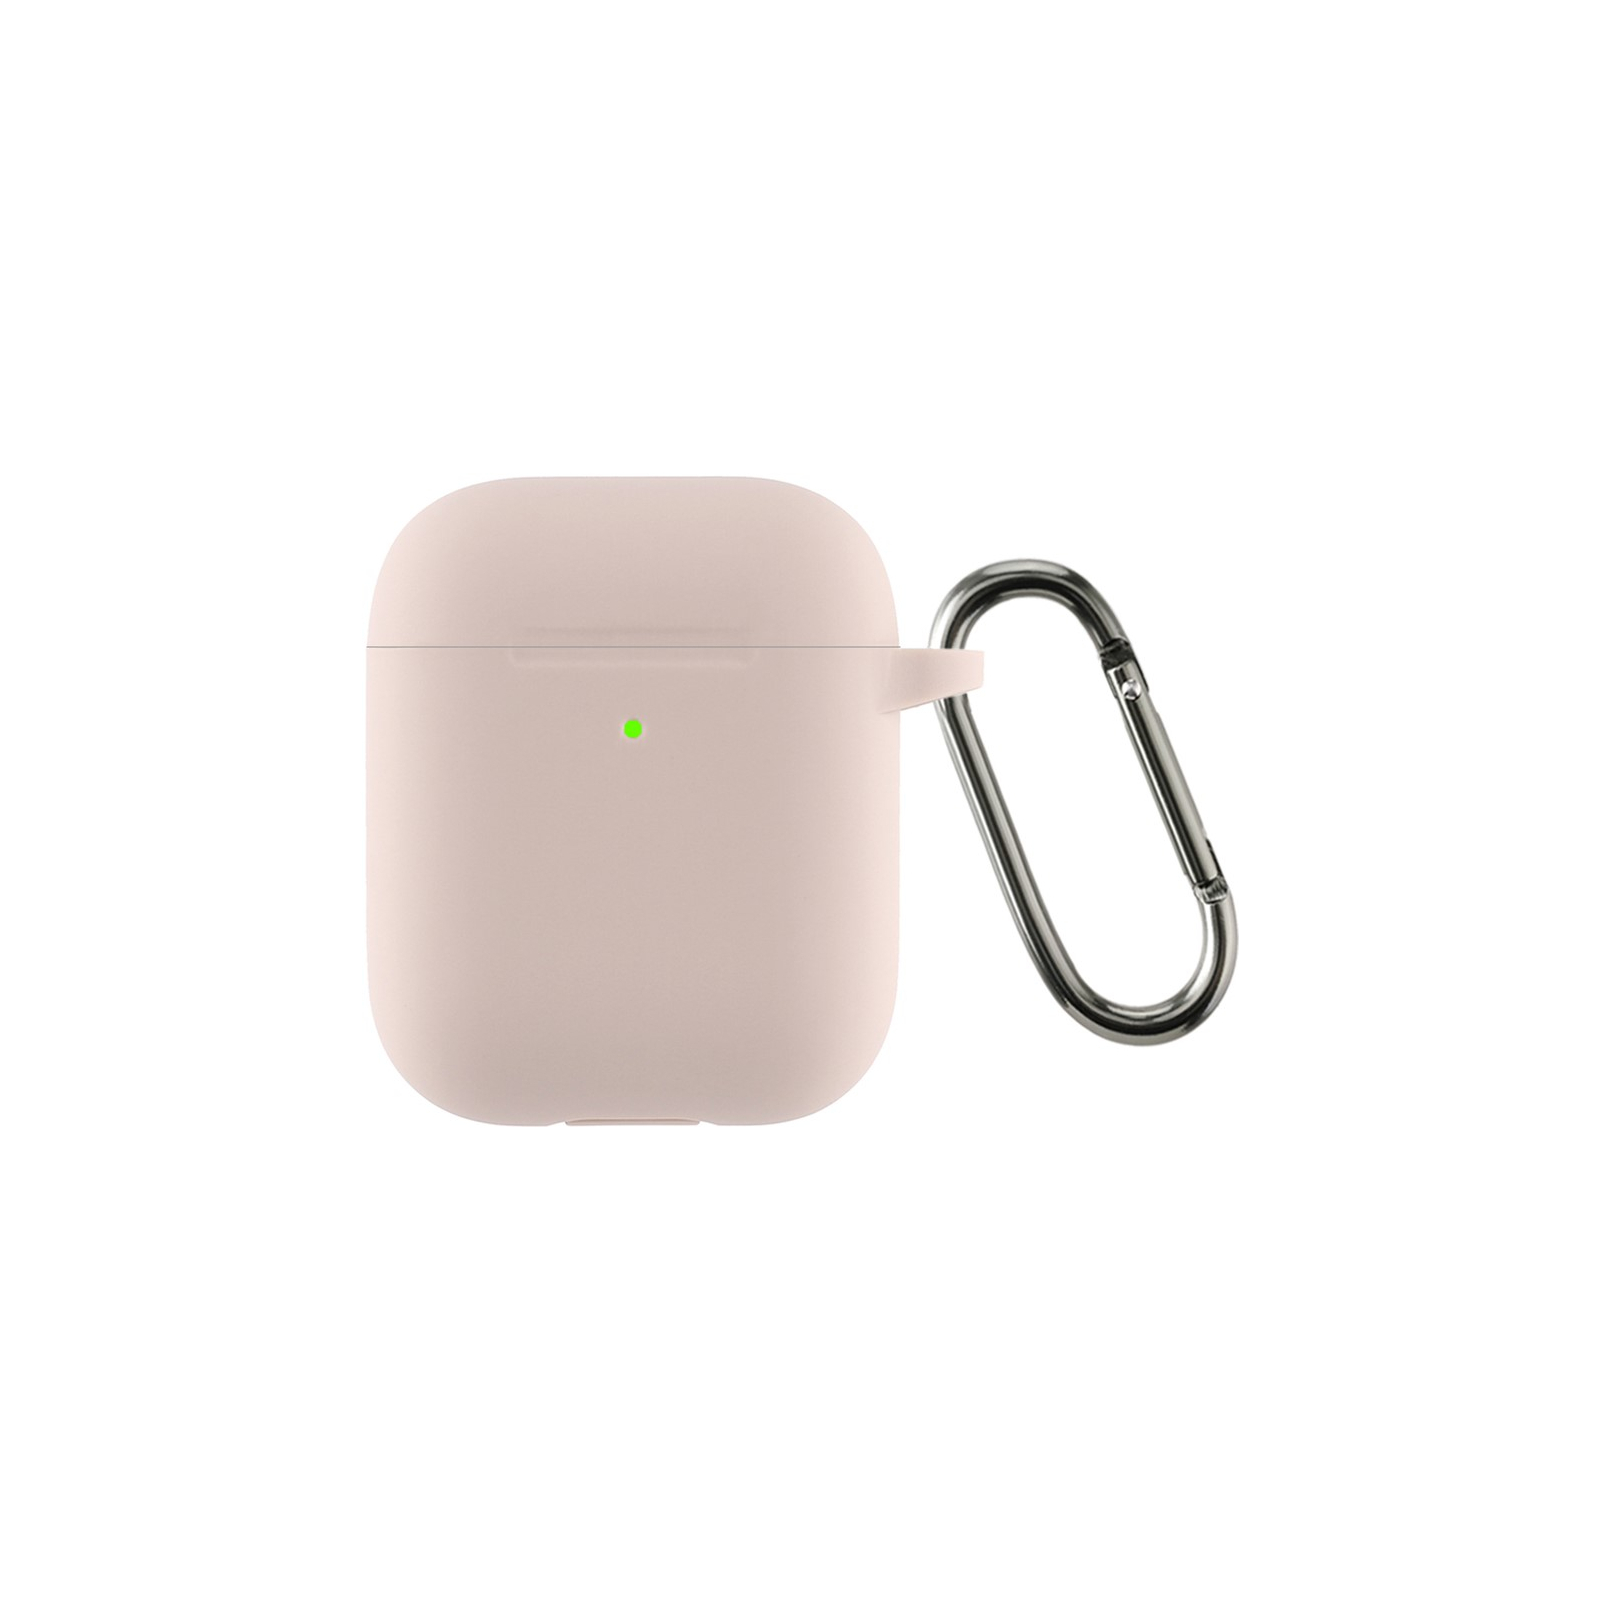 Чохол для навушників Armorstandart Ultrathin Silicone Case With Hook для Apple AirPods 2 Mint Green (ARM59686)